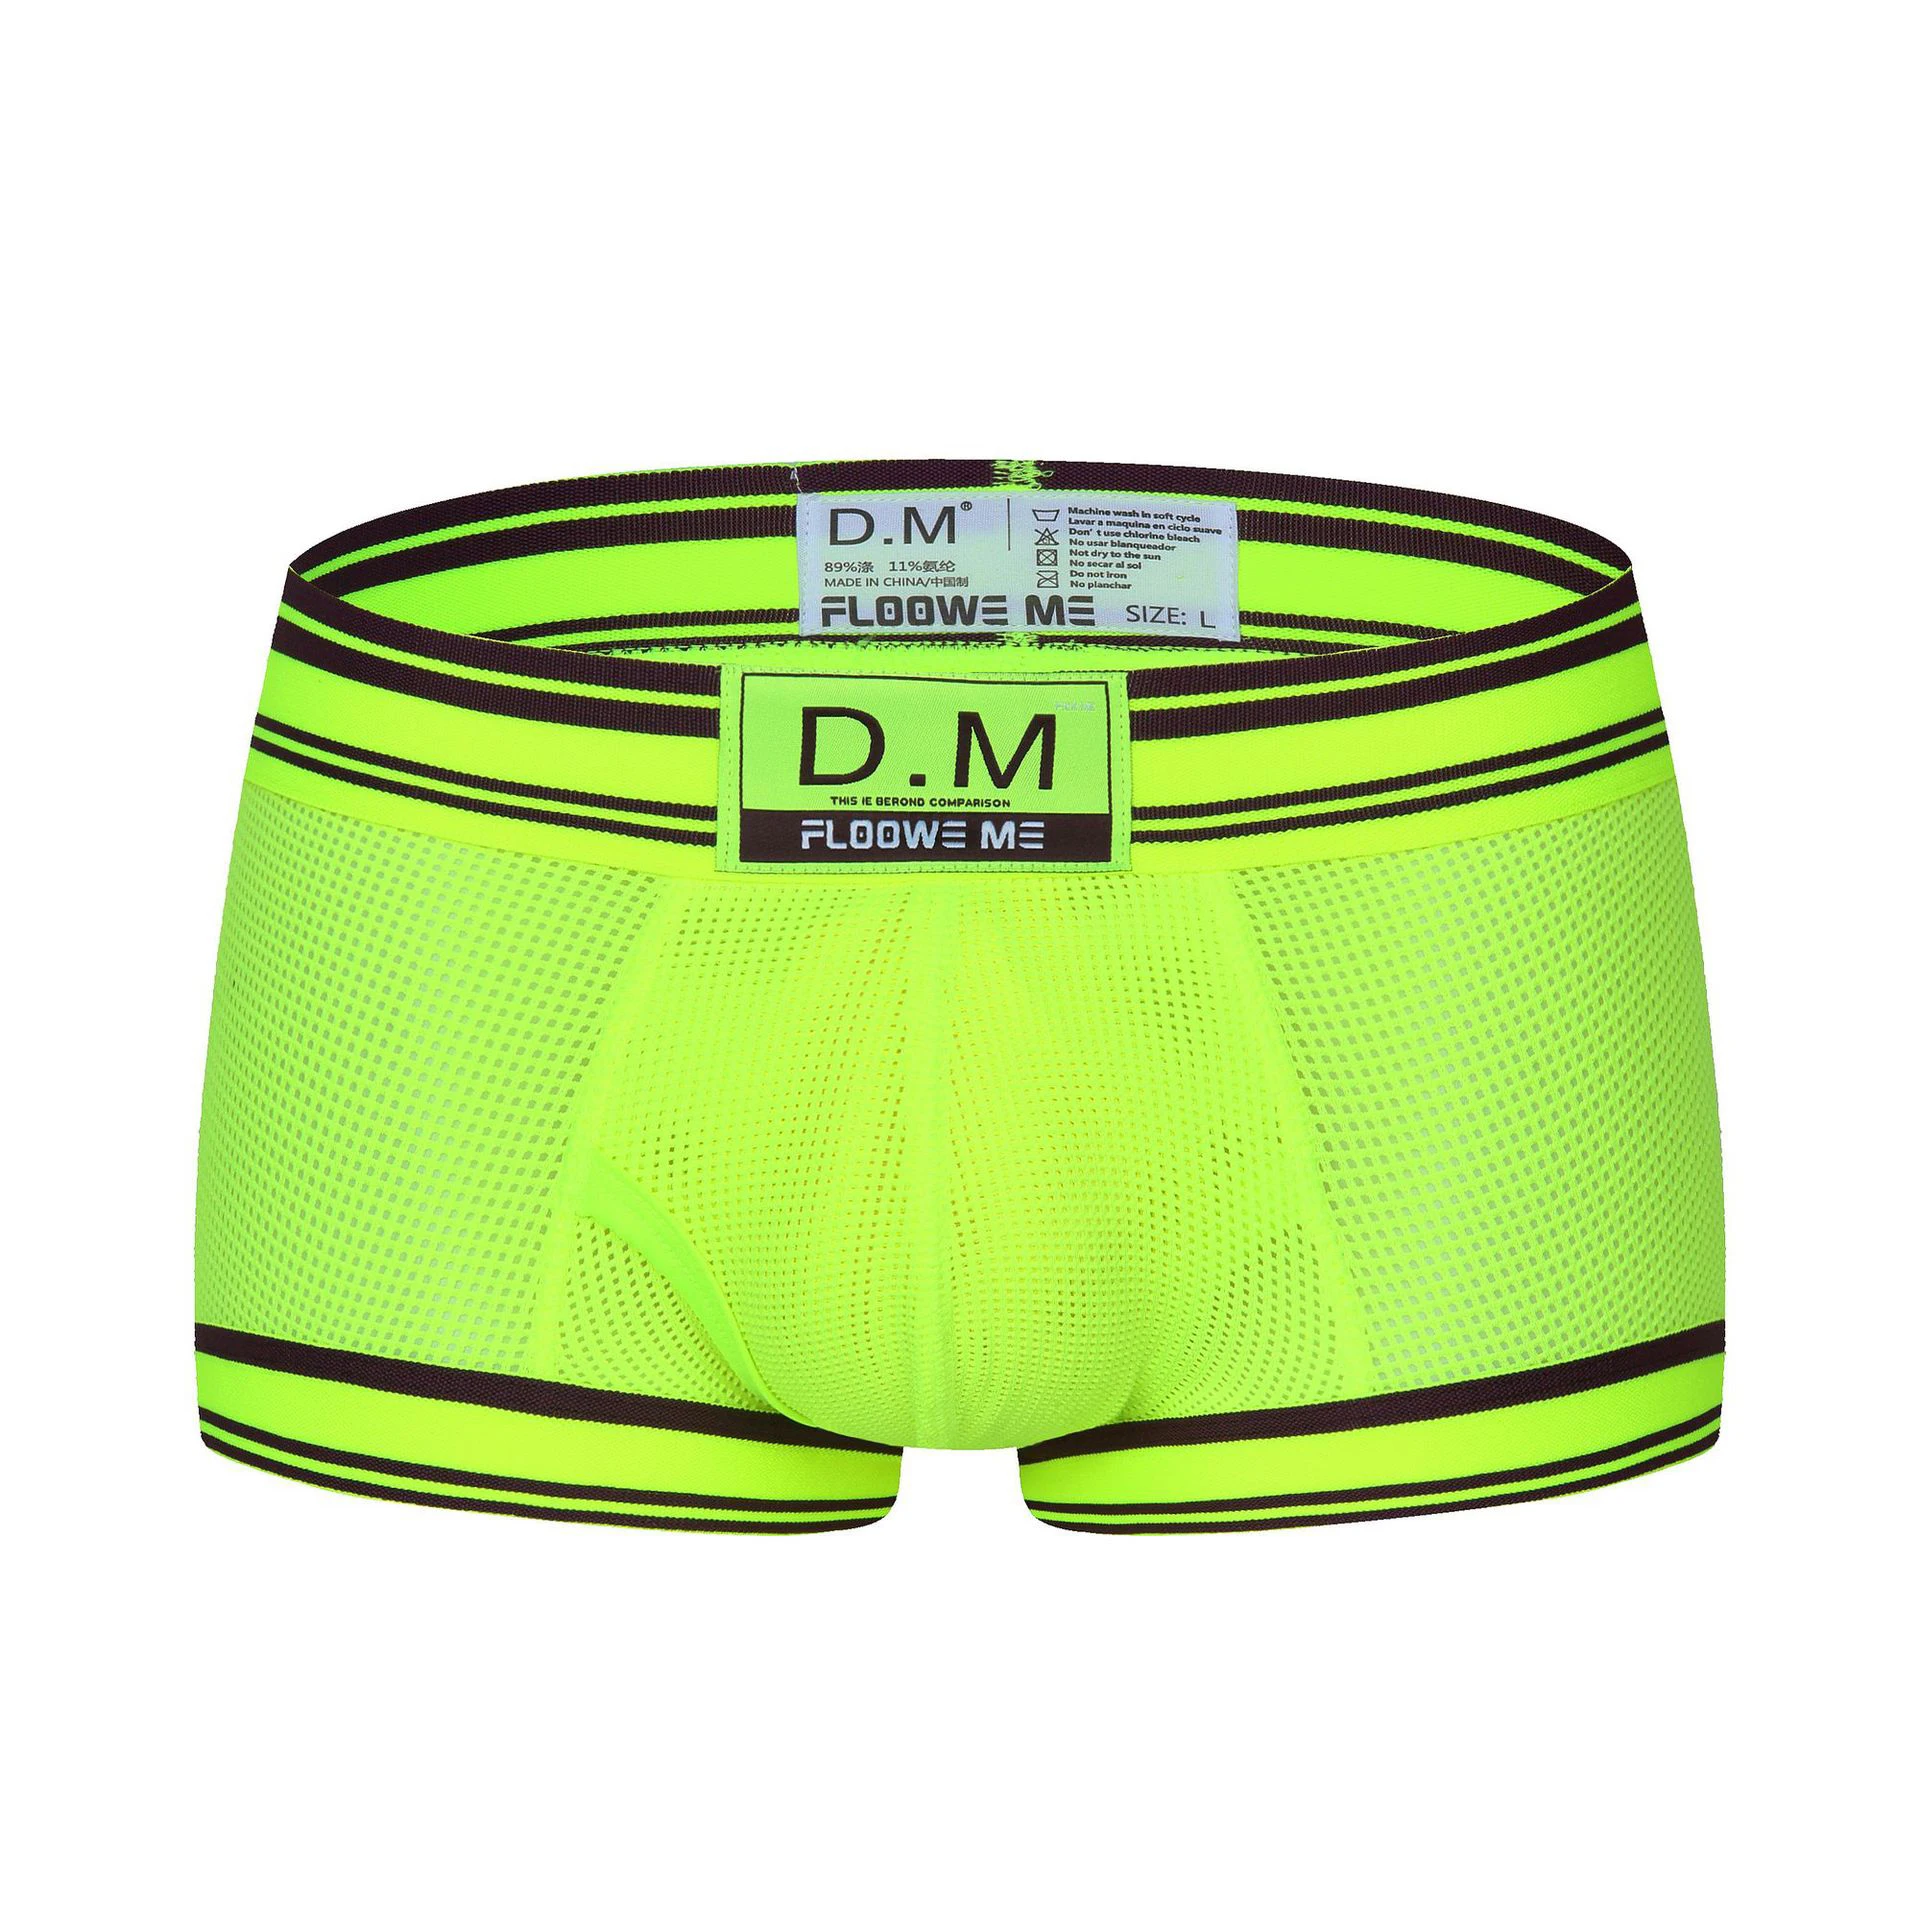 Men's Underwear Mesh Cool Boxers Pouch Convex Design Four Corners Comfortable Sports Under Shorts Panties for Men Boys